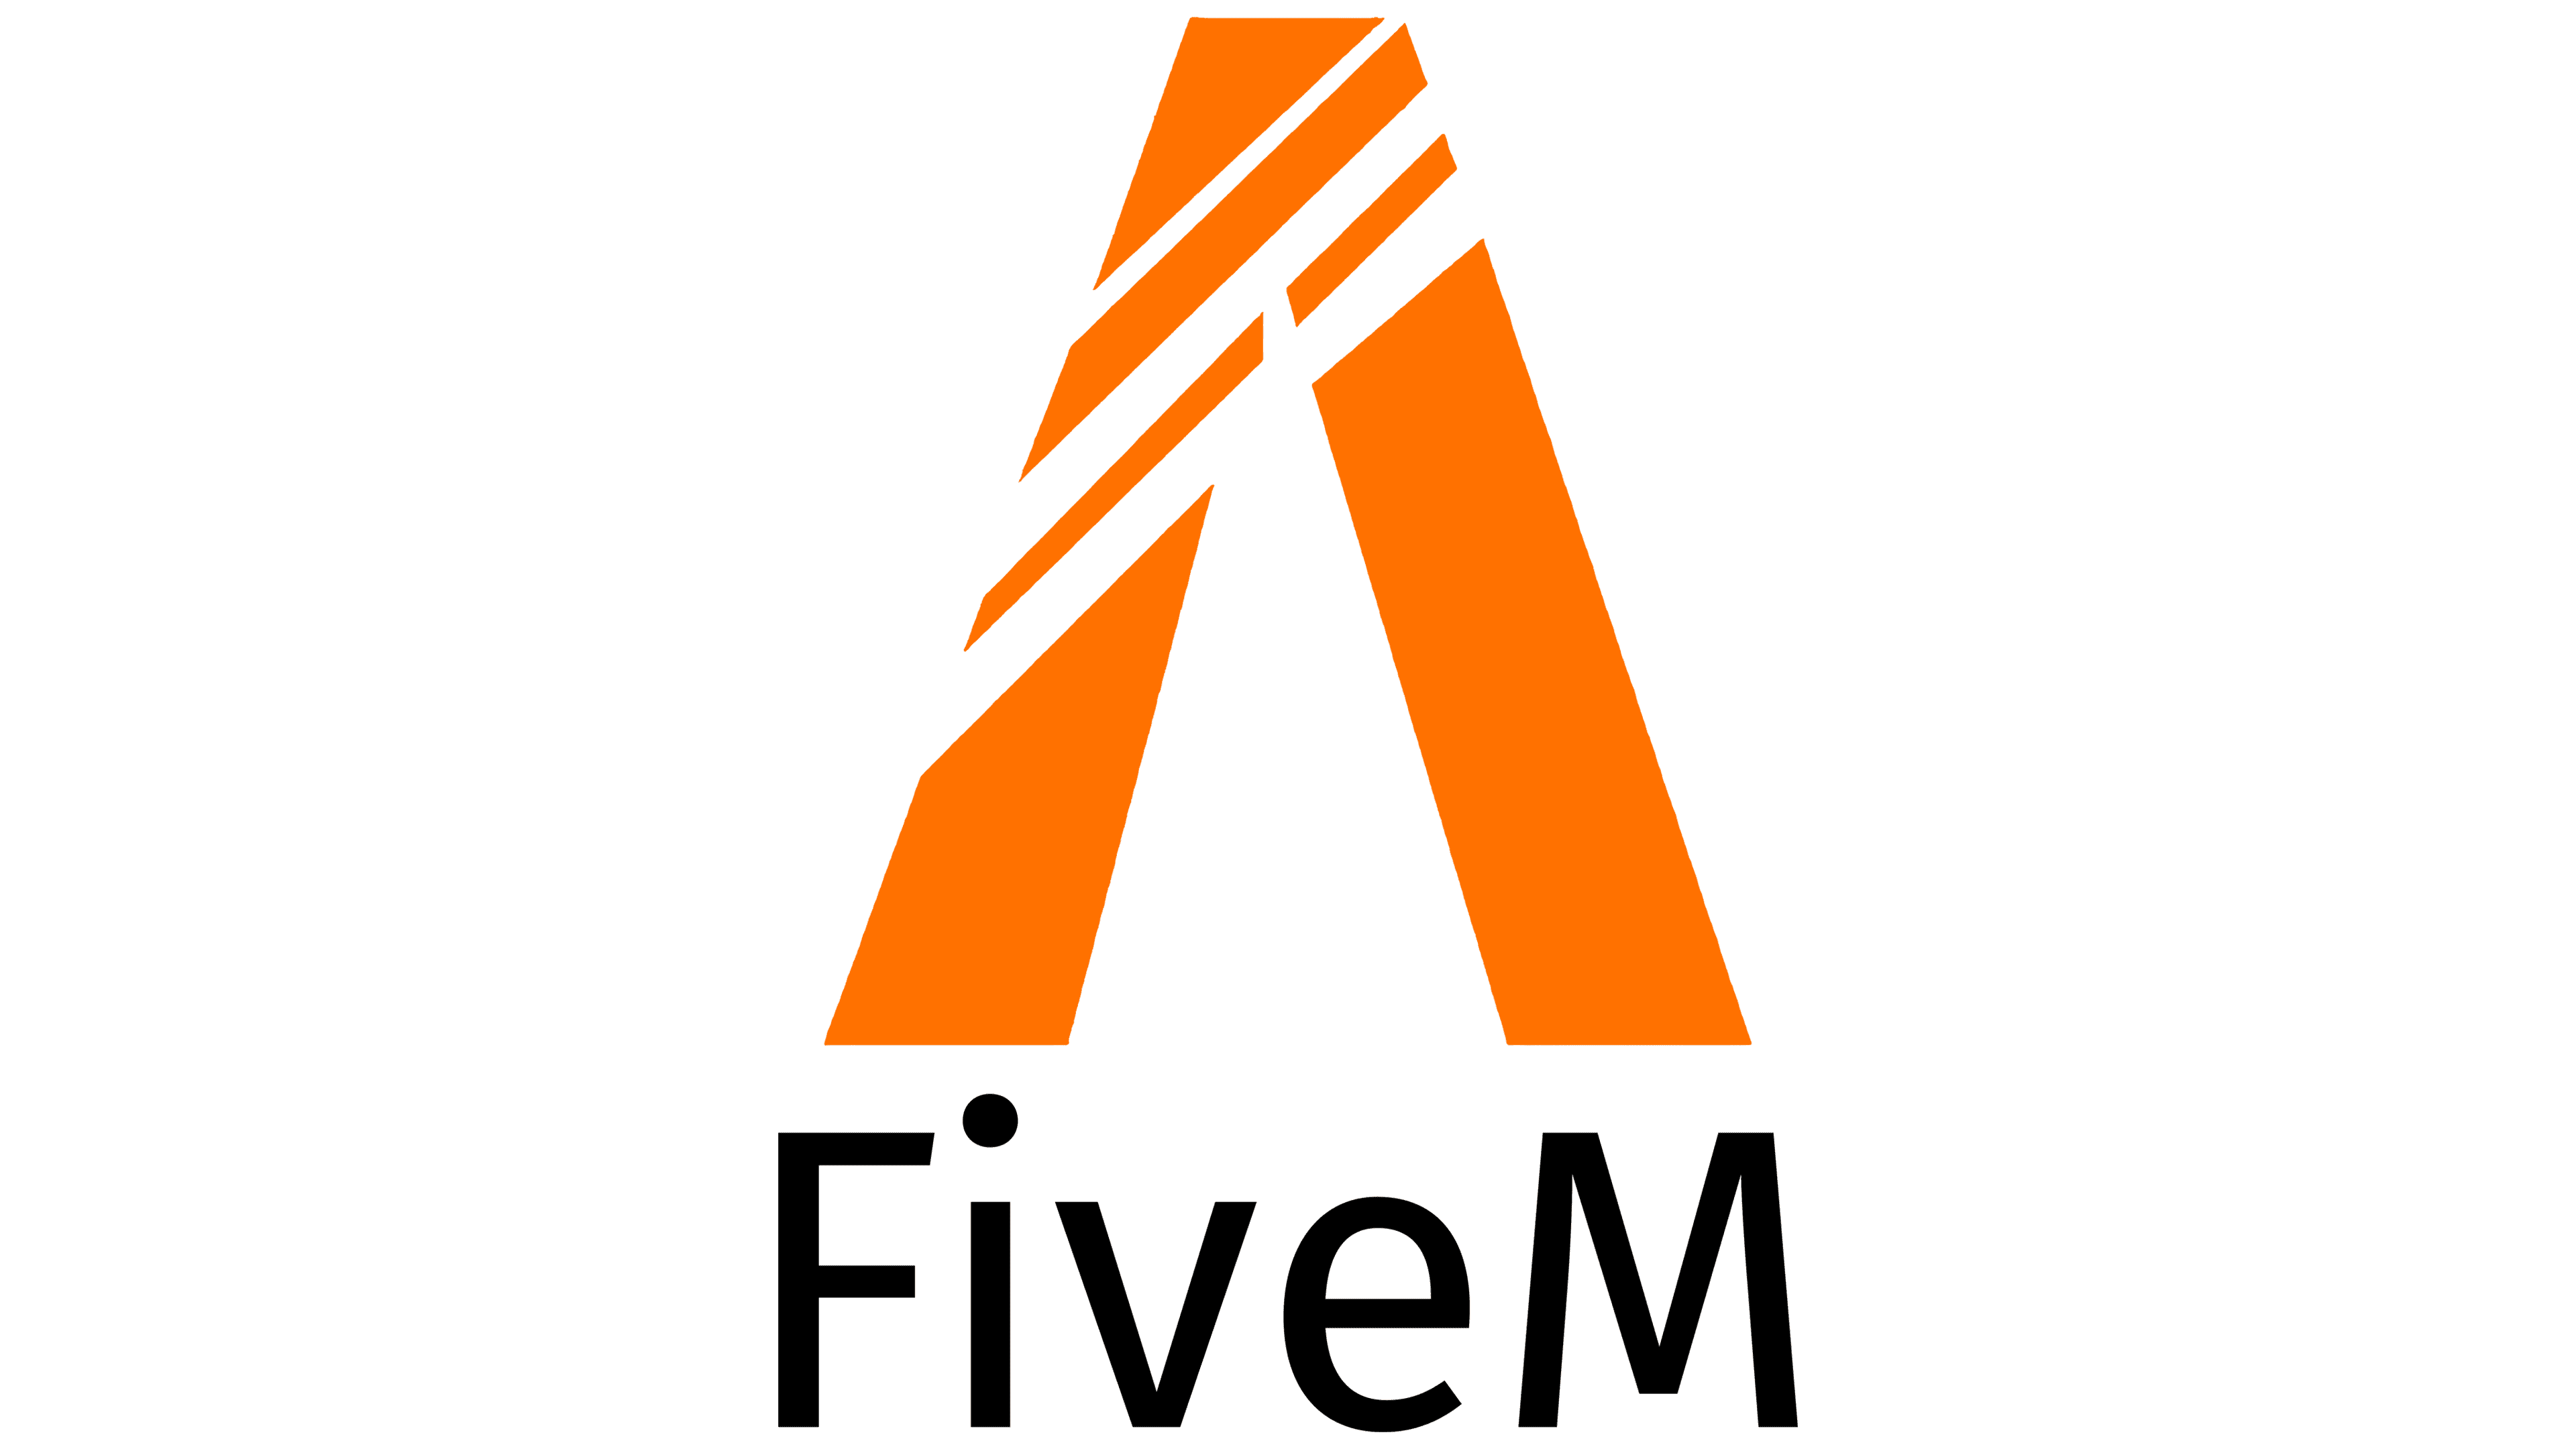 Five m. FIVEM. FIVEM знак. FIVEM PNG. Значки на карте для FIVEM.